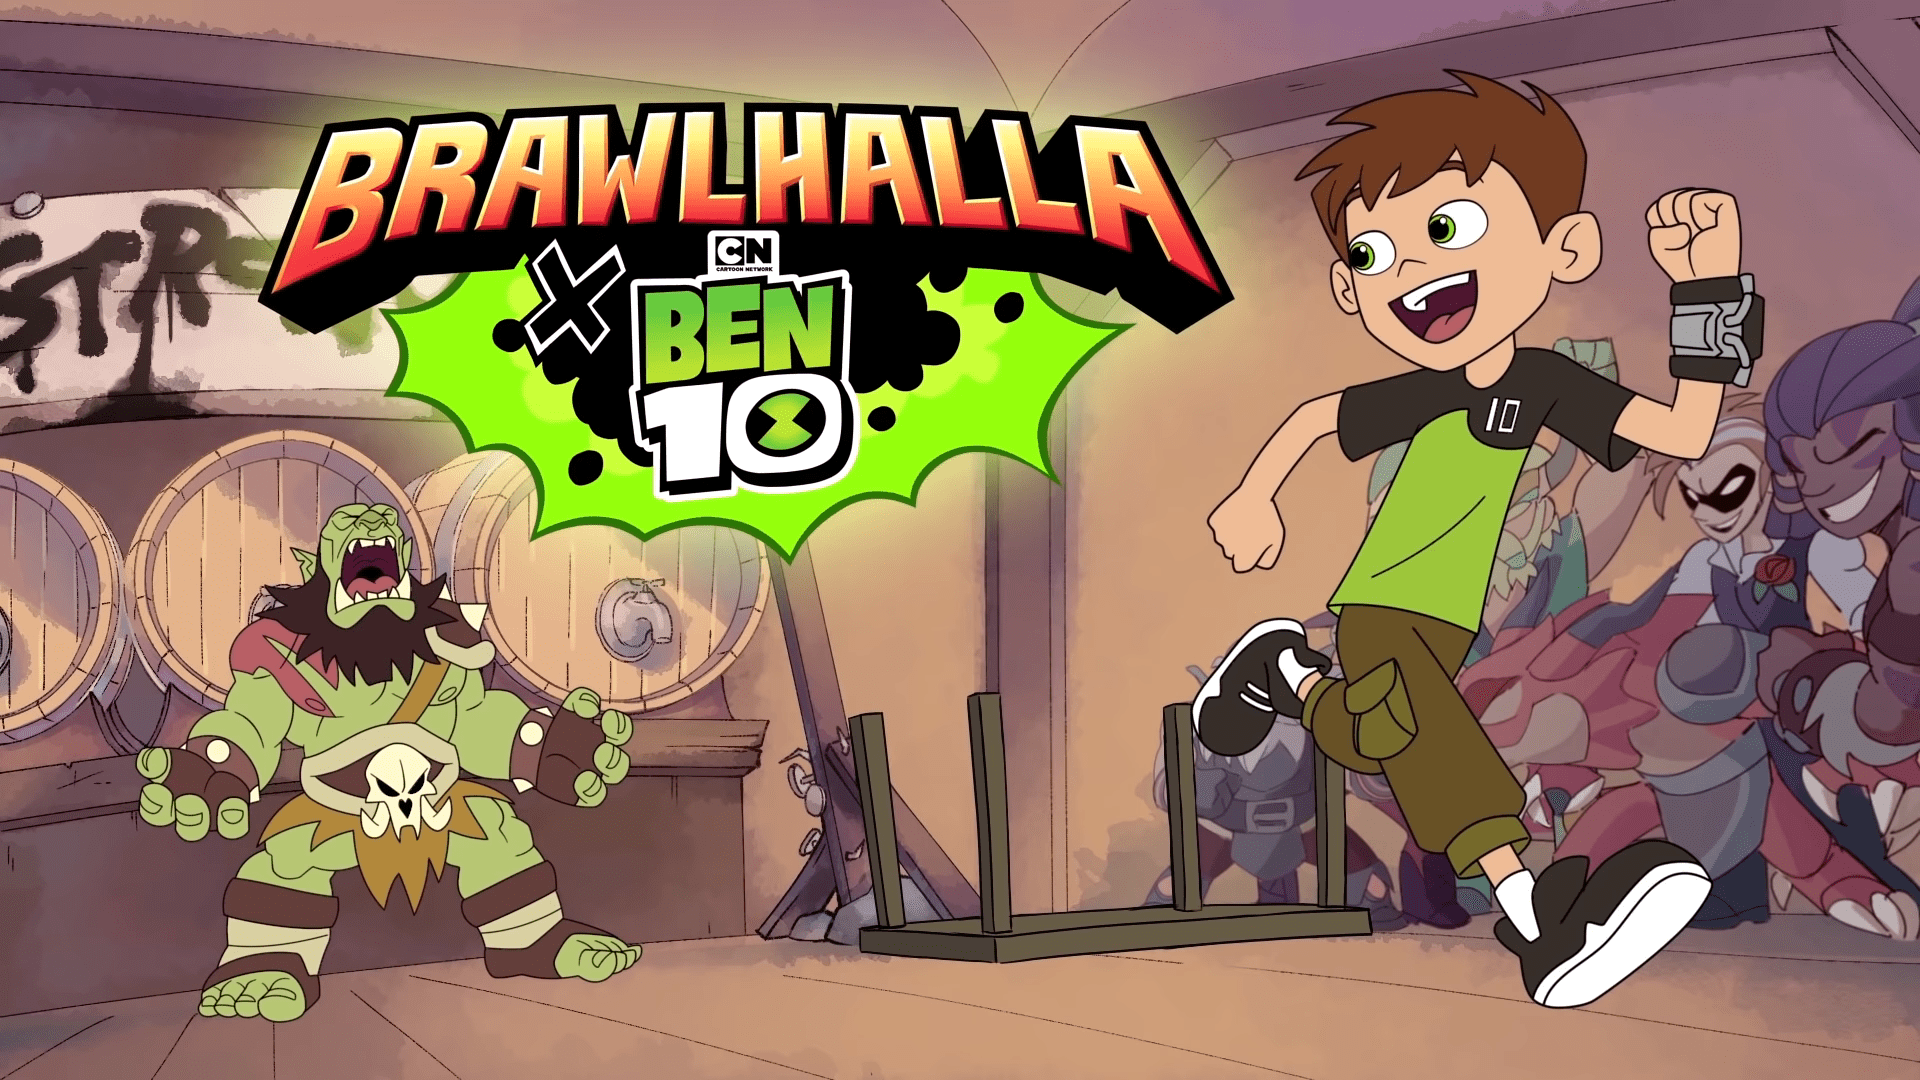 Ben 10 joins Brawlhalla